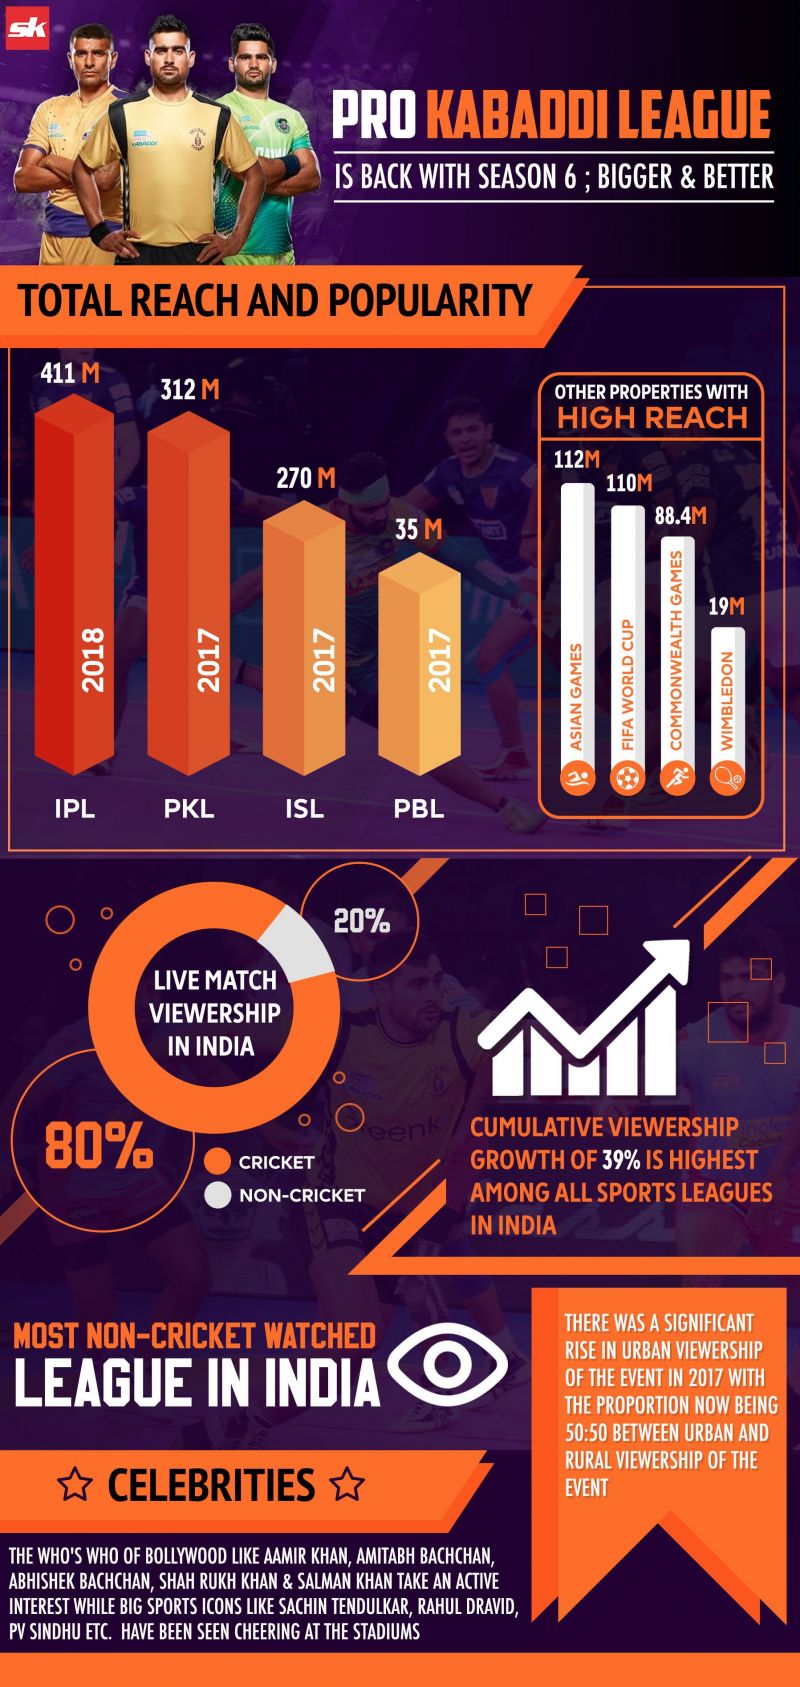 Statistics from the Pro Kabaddi League